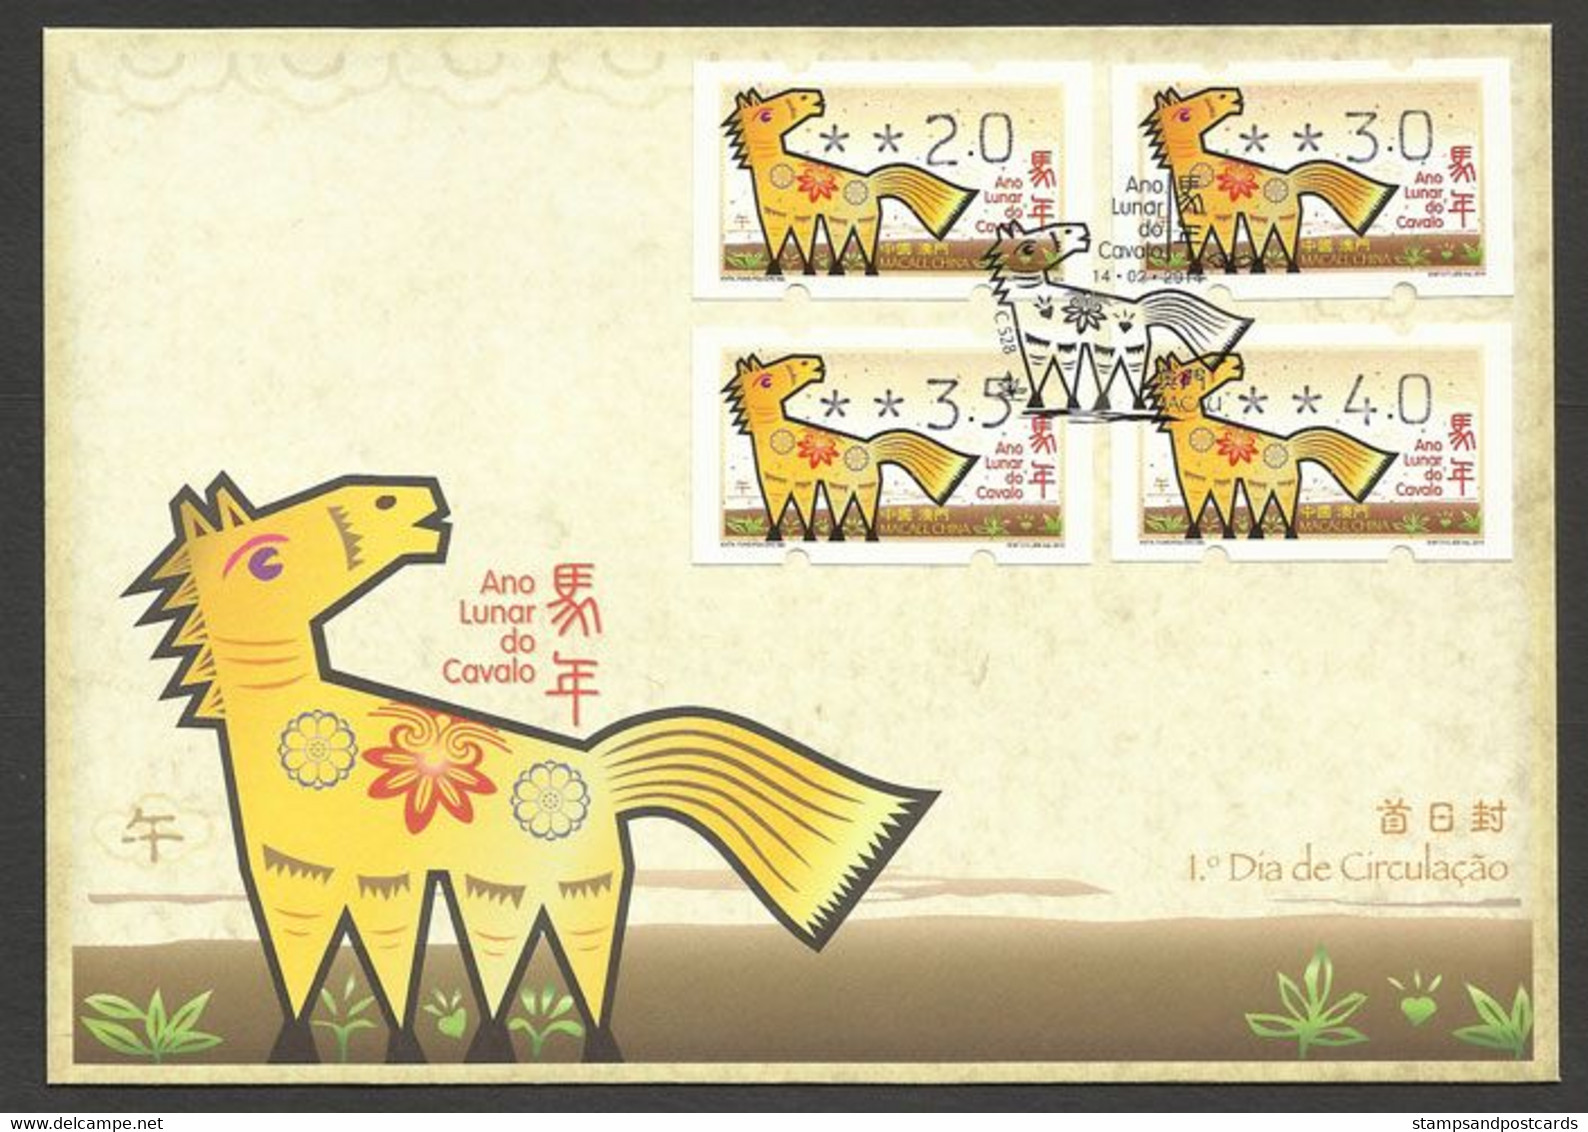 Macau Chine 2014 Année Lunaire Du Cheval Timbres Distributeur Klussendorf FDC Macao China Lunar Year Of The Horse ATM - Automatenmarken